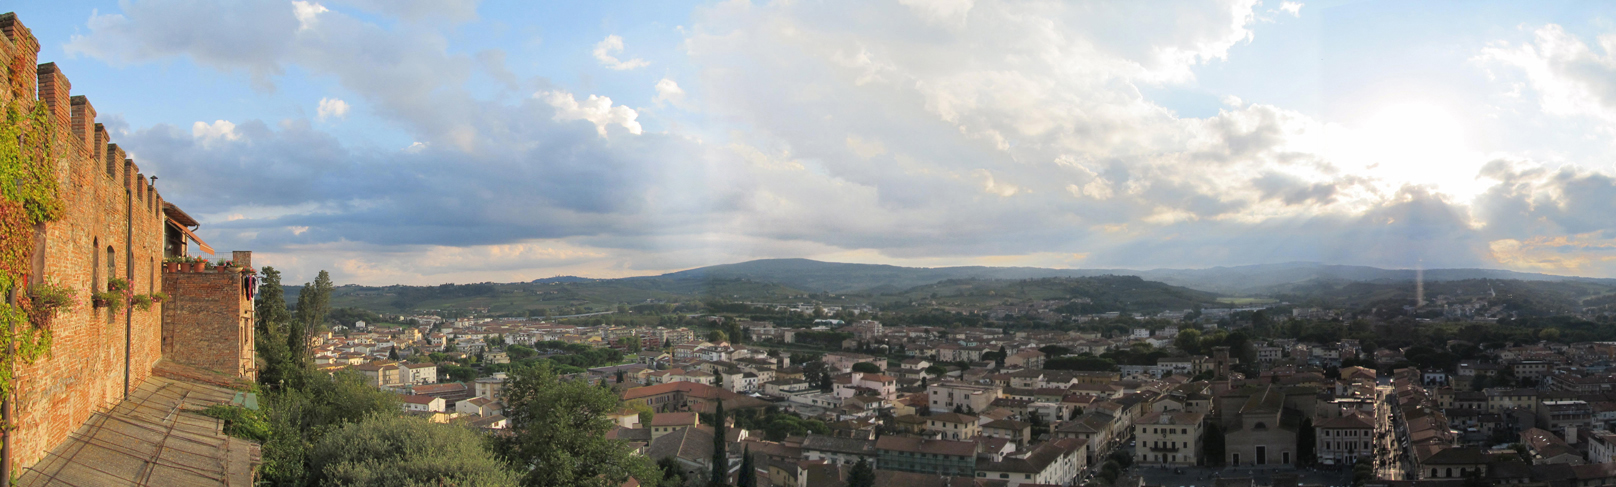 vista panoramica su Certaldo dal Castello